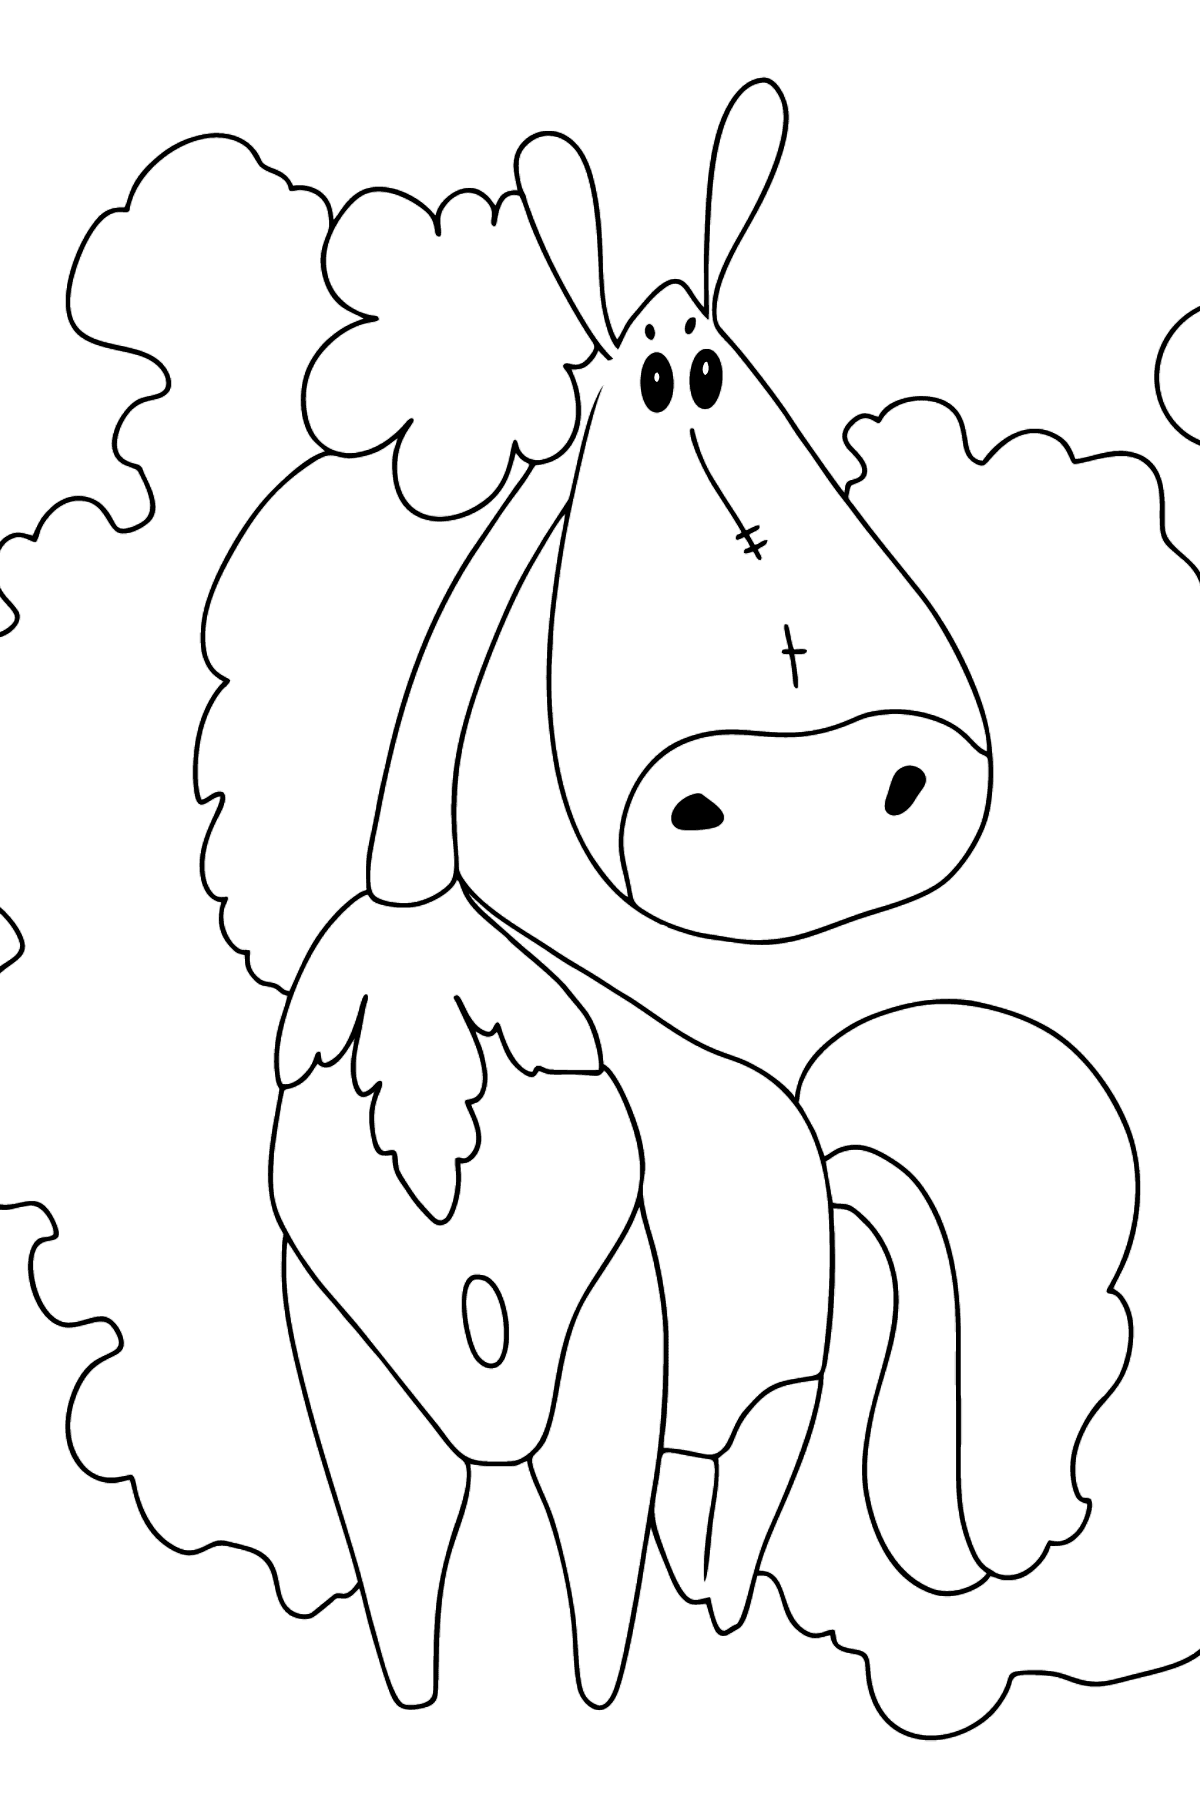 Dibujo para colorear un caballo fashionista - Dibujos para Colorear para Niños